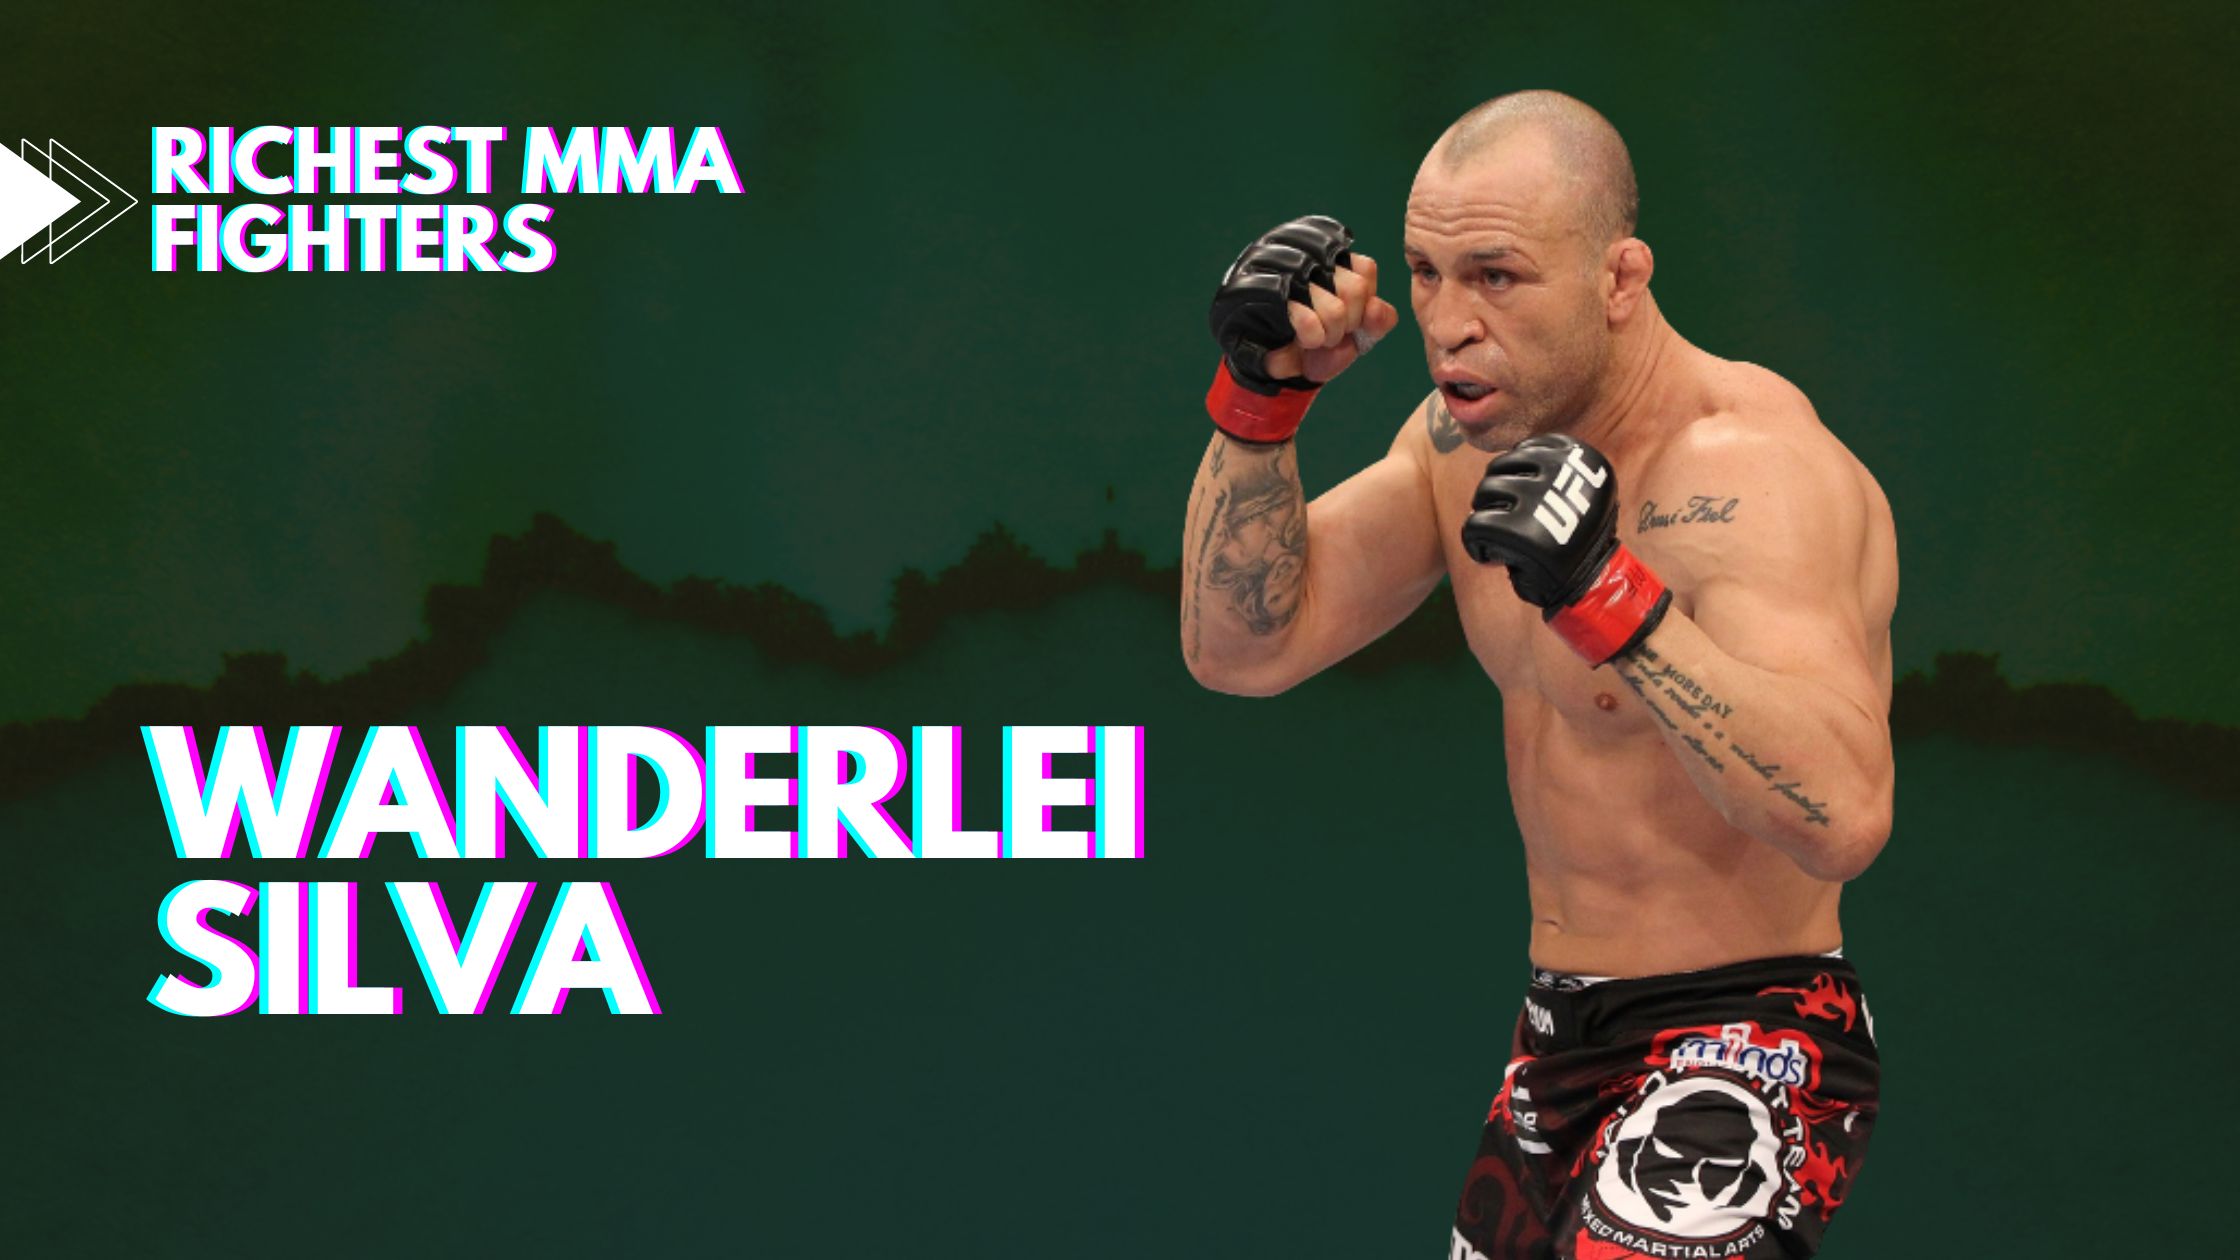 Wanderlei Silva - Richest MMA fighters